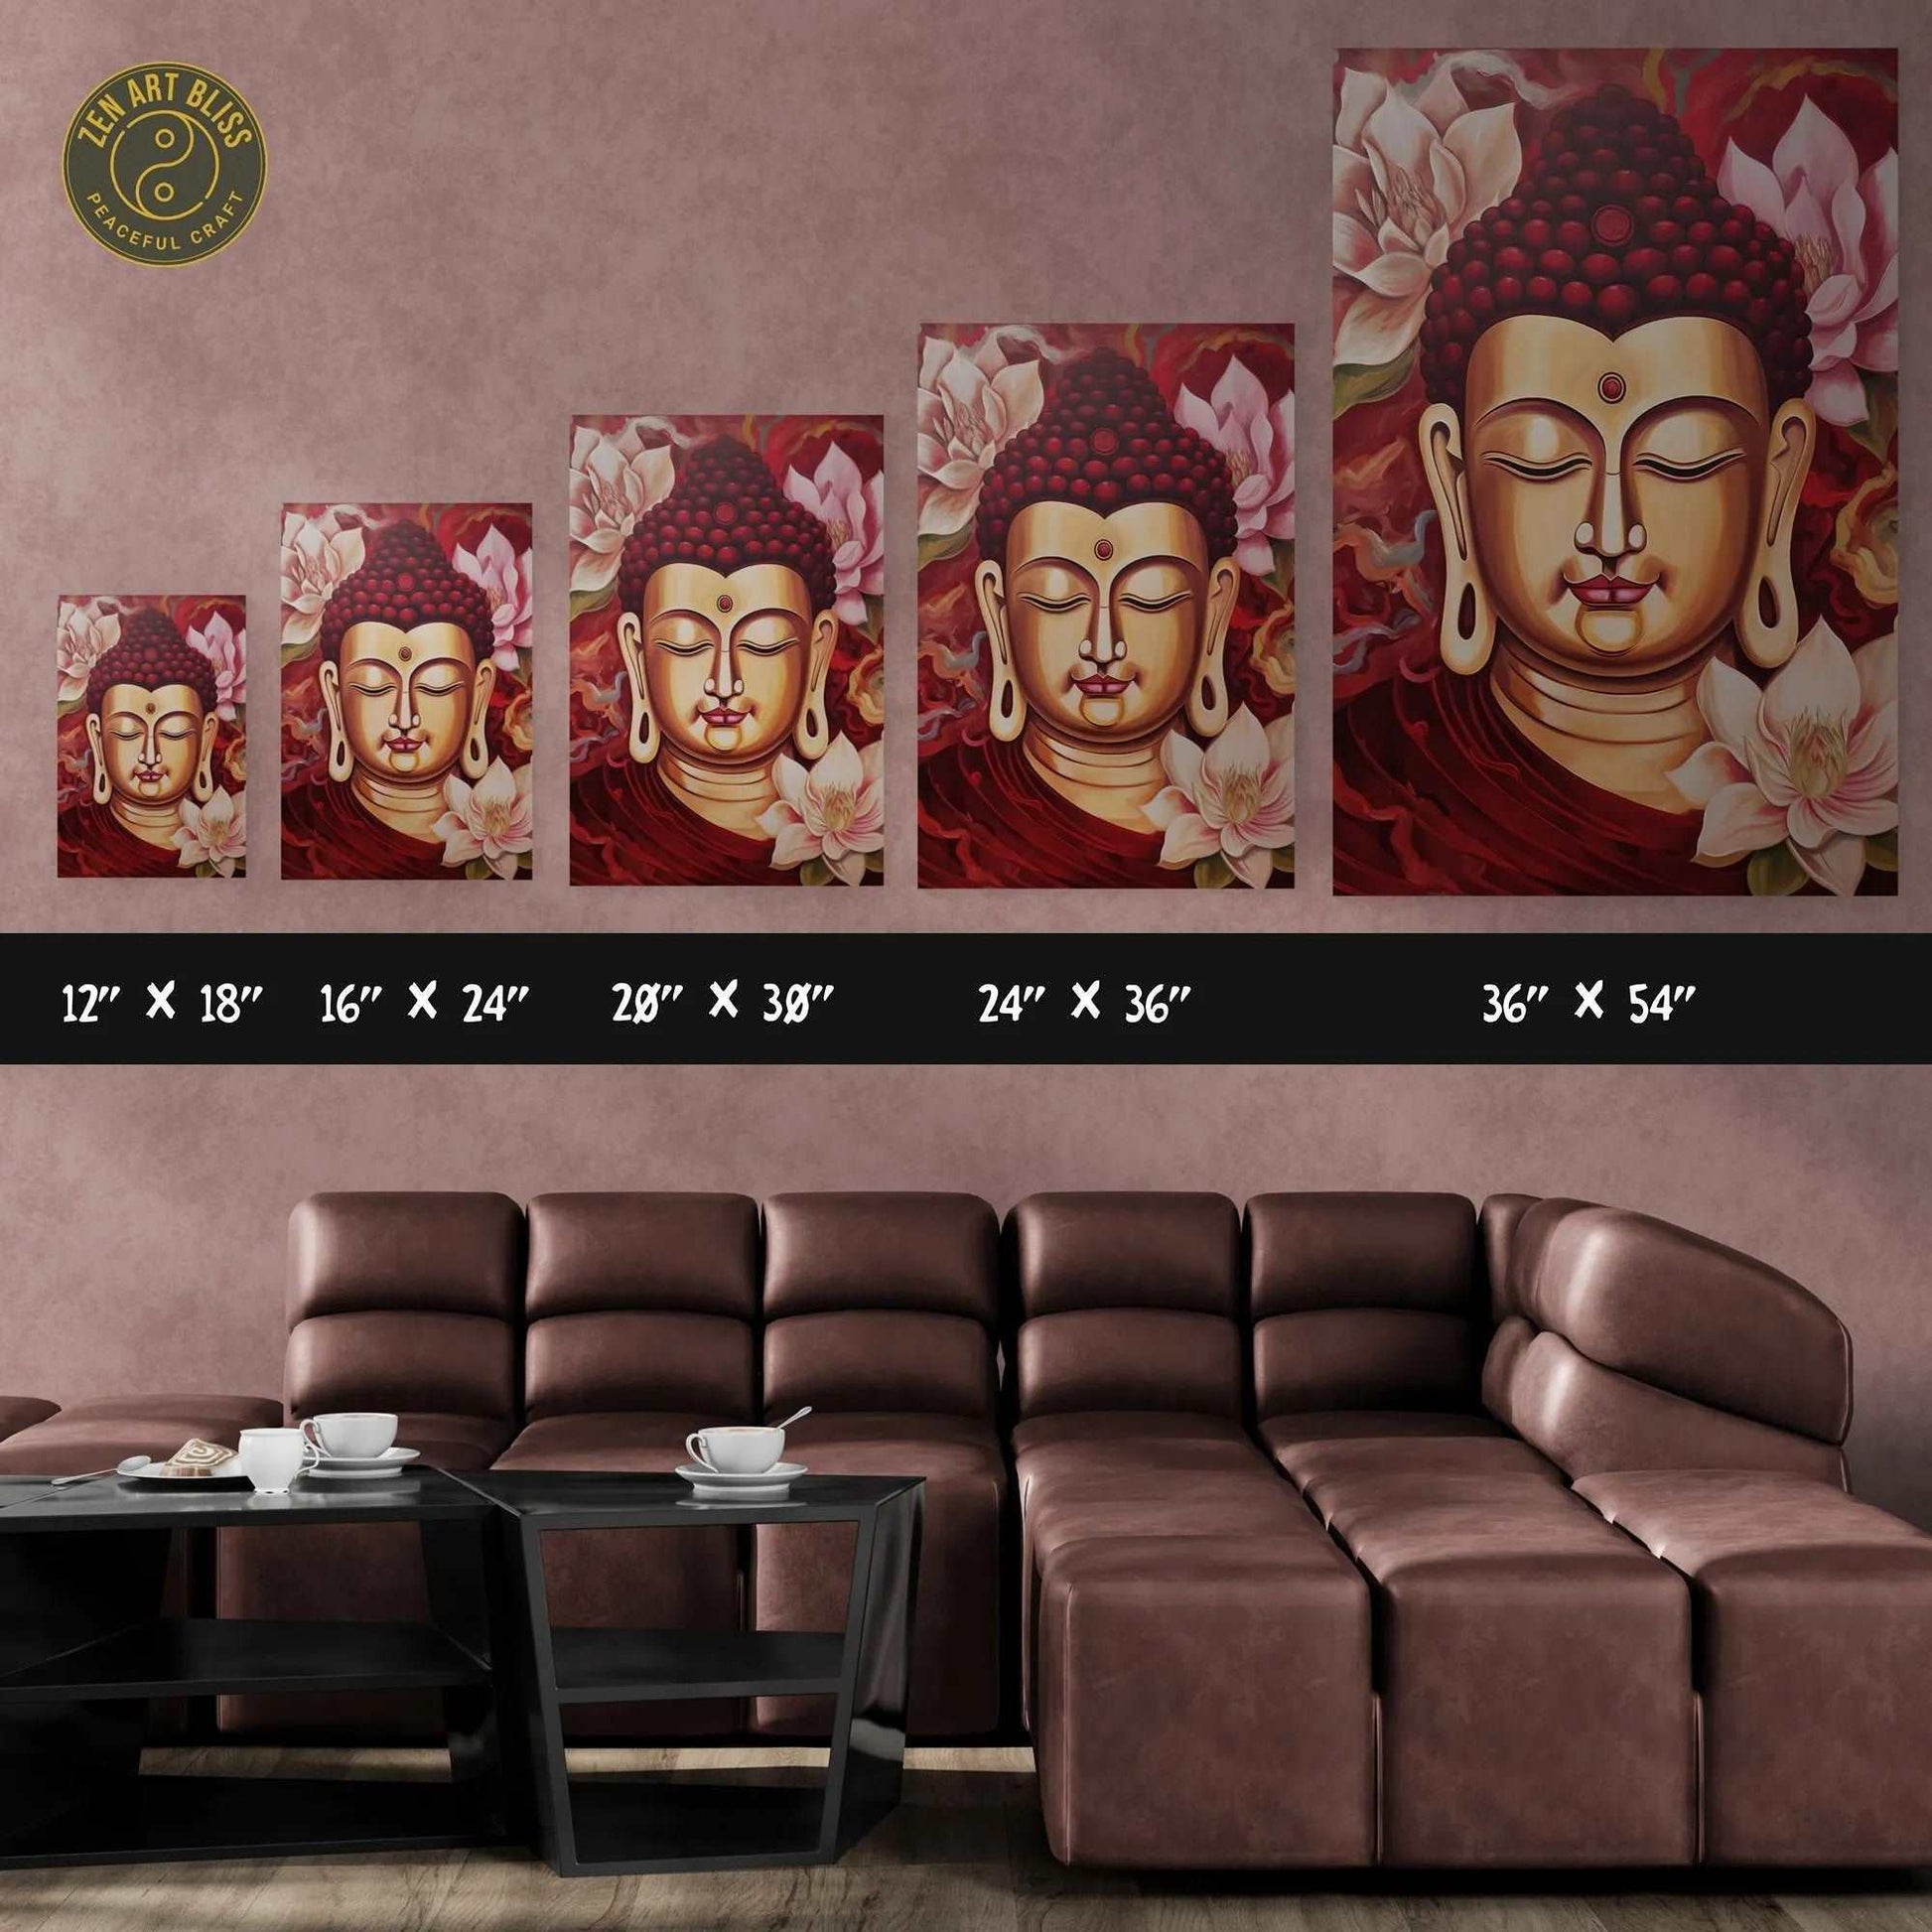 ZenArtBliss.com's Buddha Poster 24x36 measurement